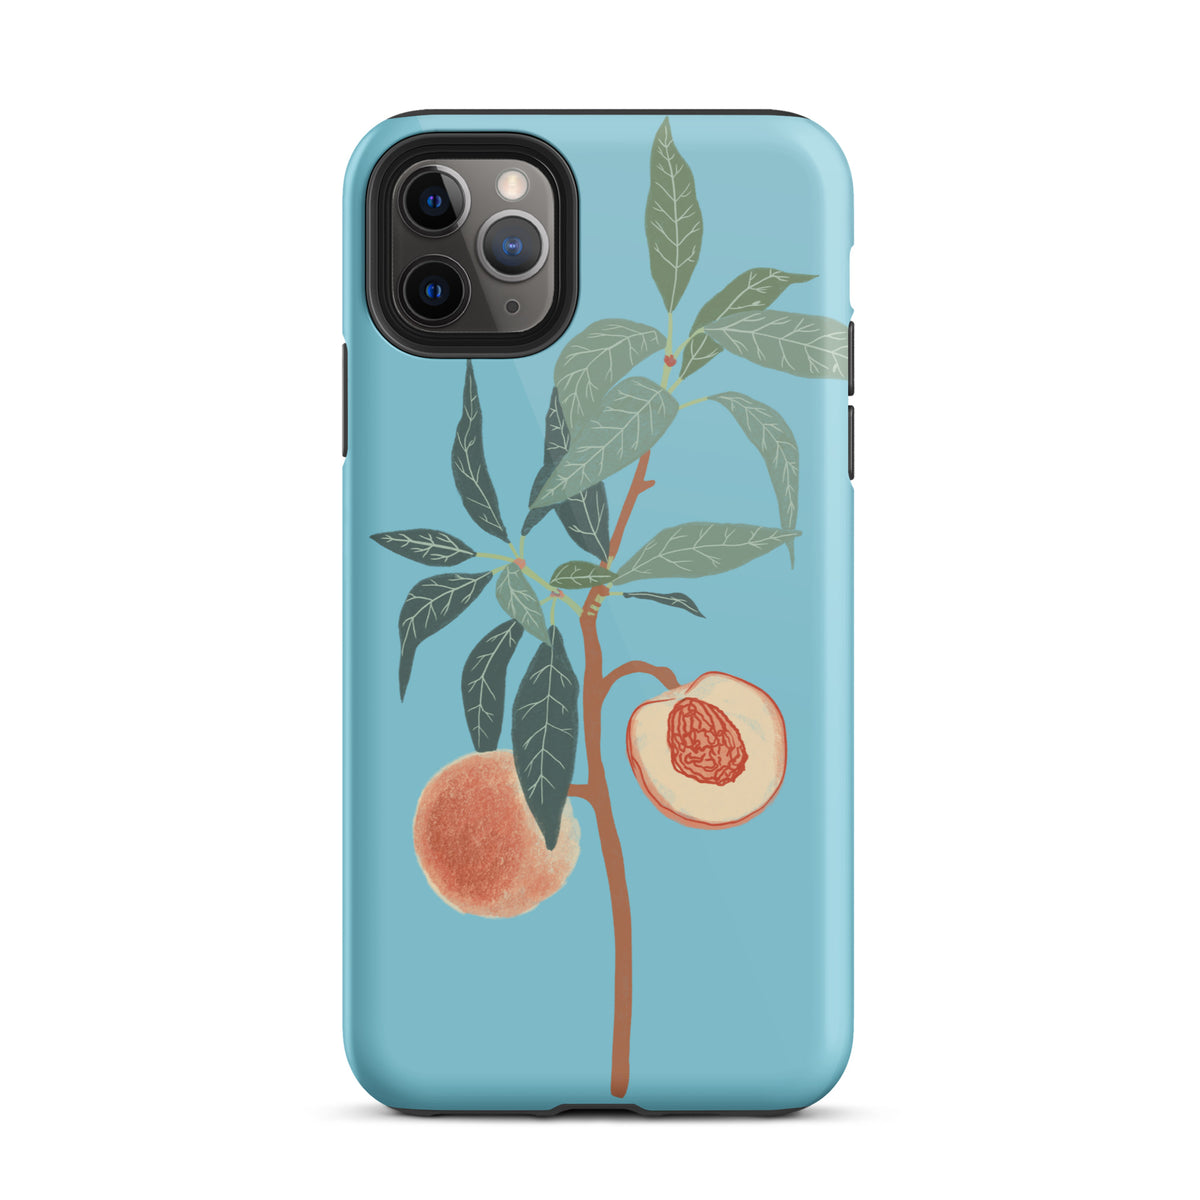 Peach tree iPhone case